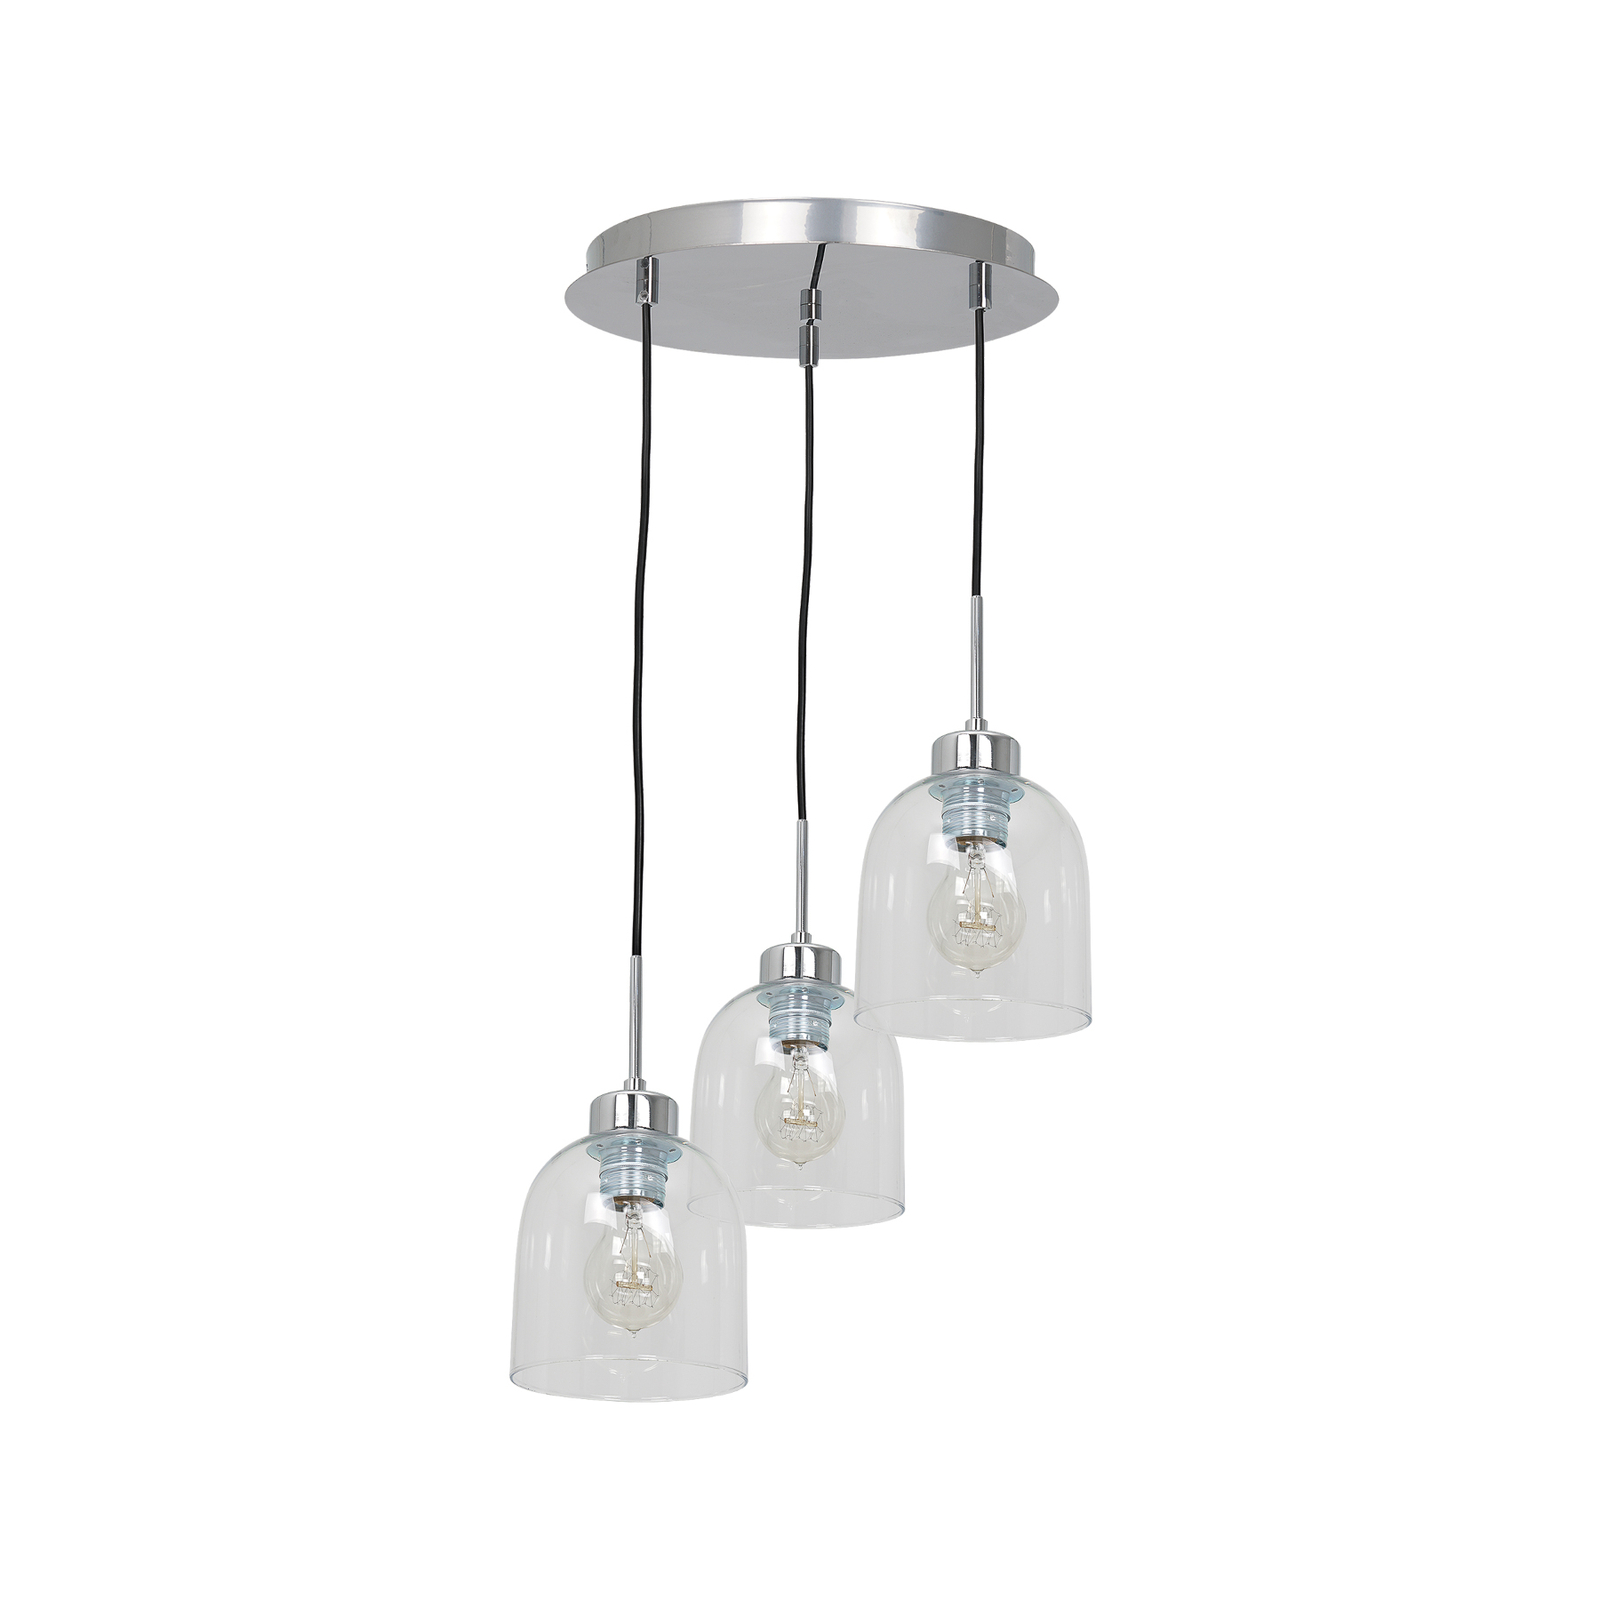 Hanglamp Fill, helder/chroom, 3-lamps, rondel